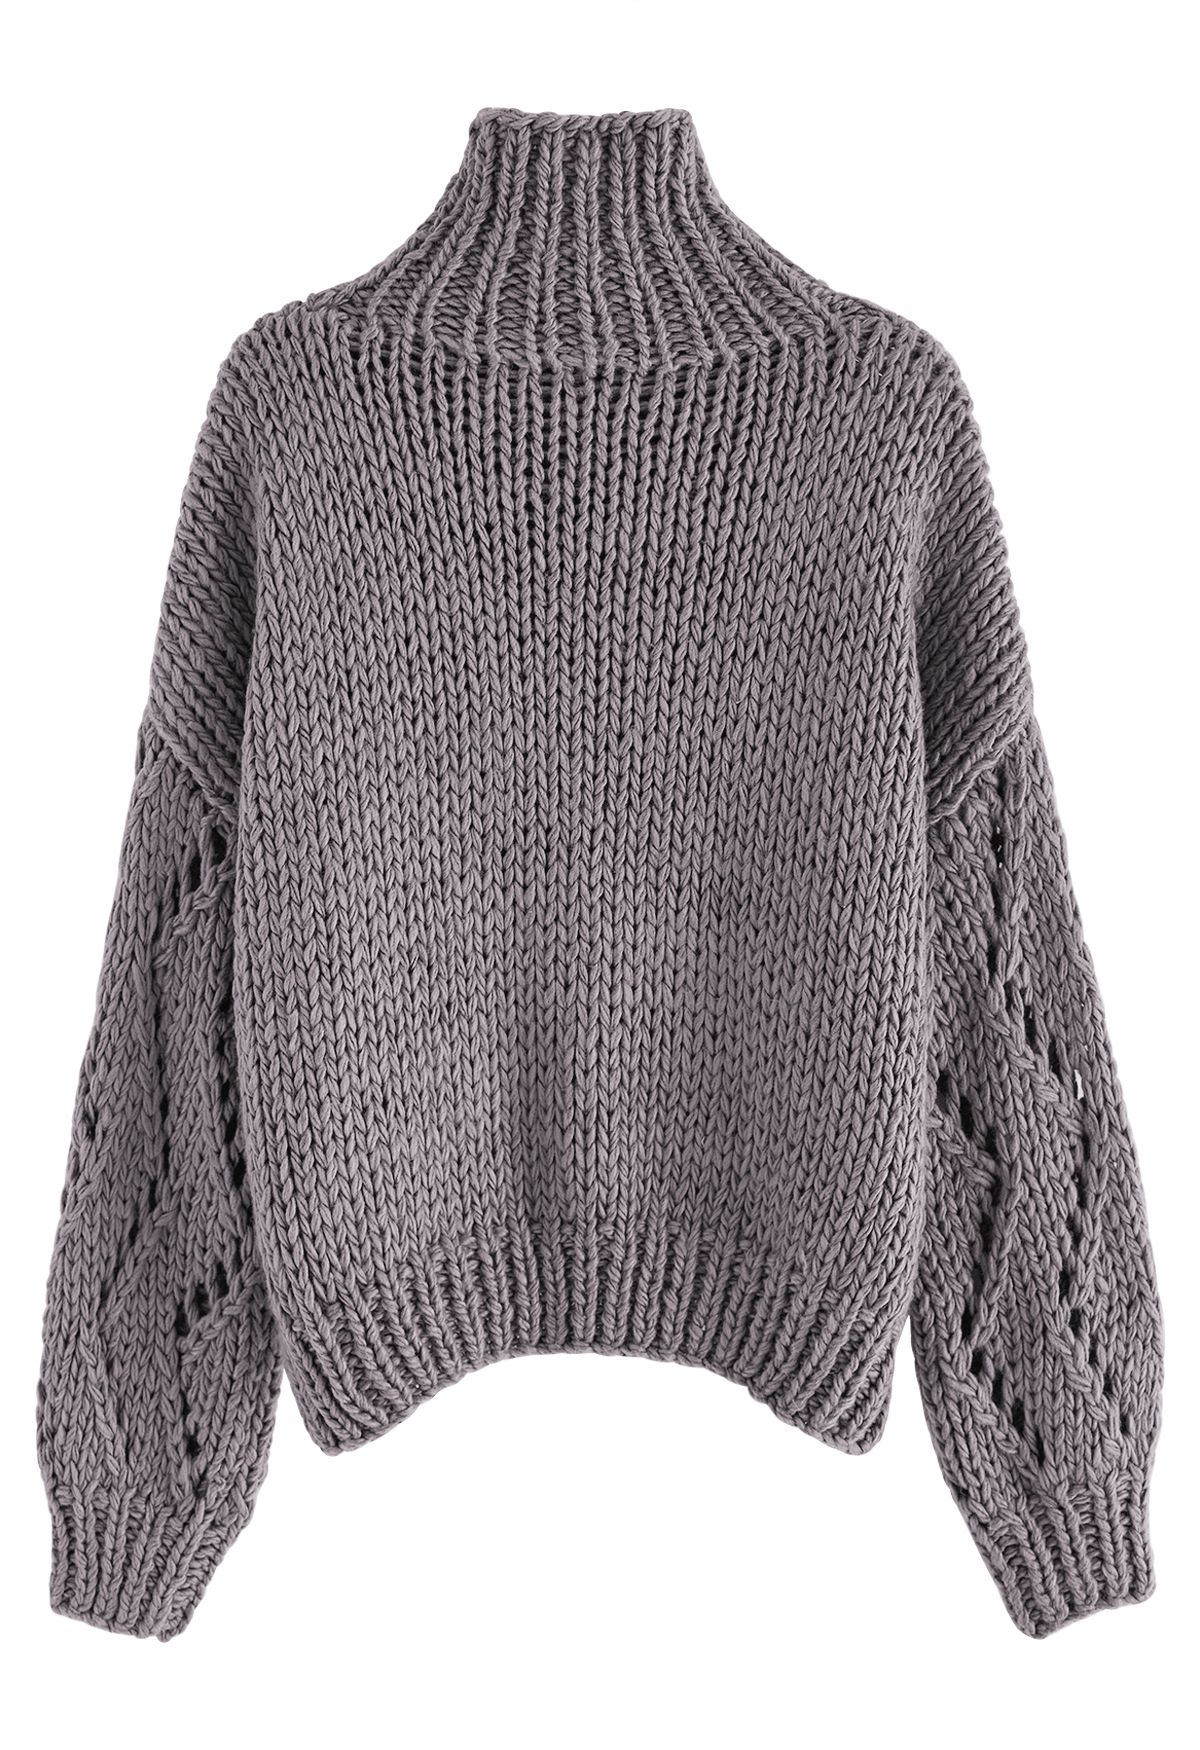 Pointelle Sleeve High Neck Hand-Knit Sweater in Dusty Purple